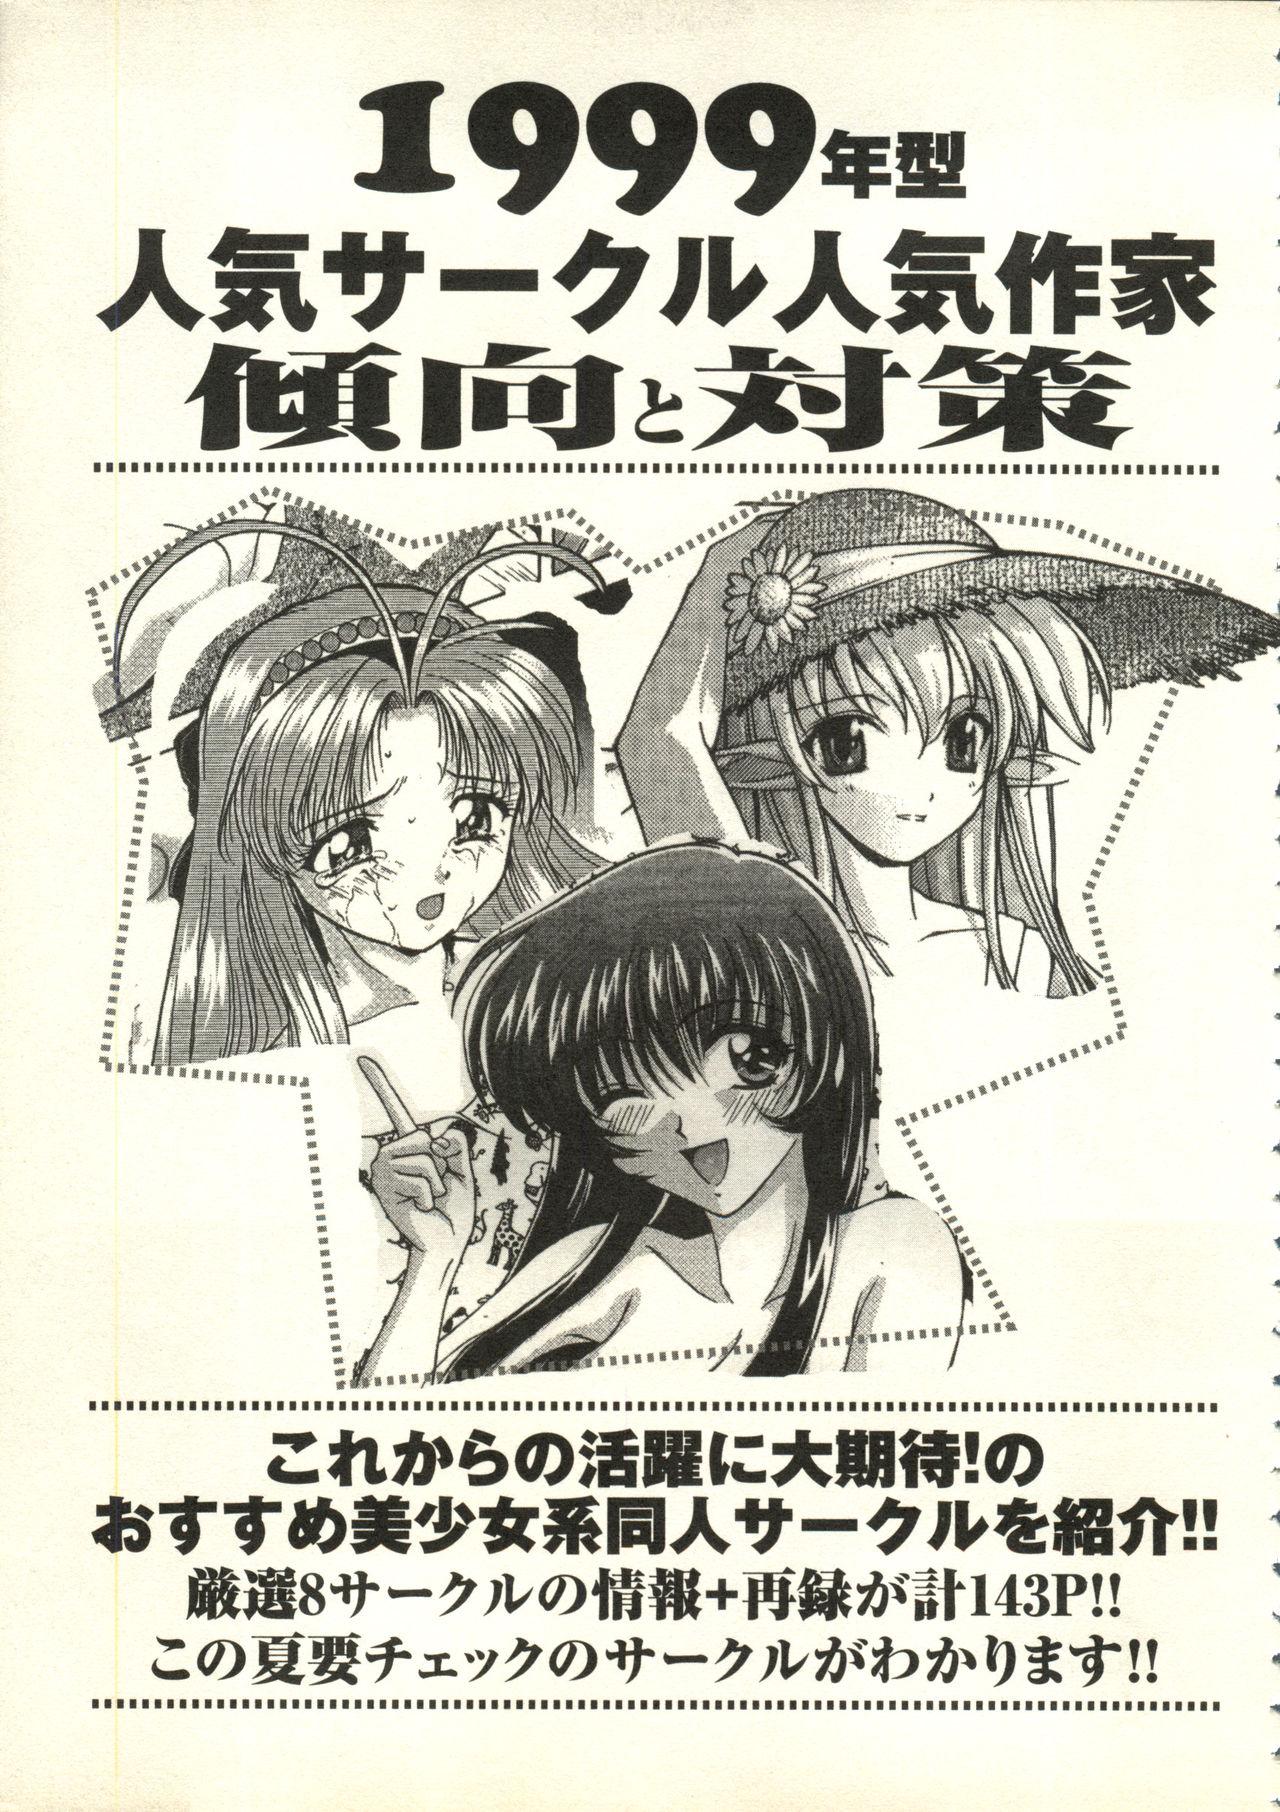 [Anthology] Bishoujo Shoukougun V3 (1) '99 Summer Edition (Various) 17